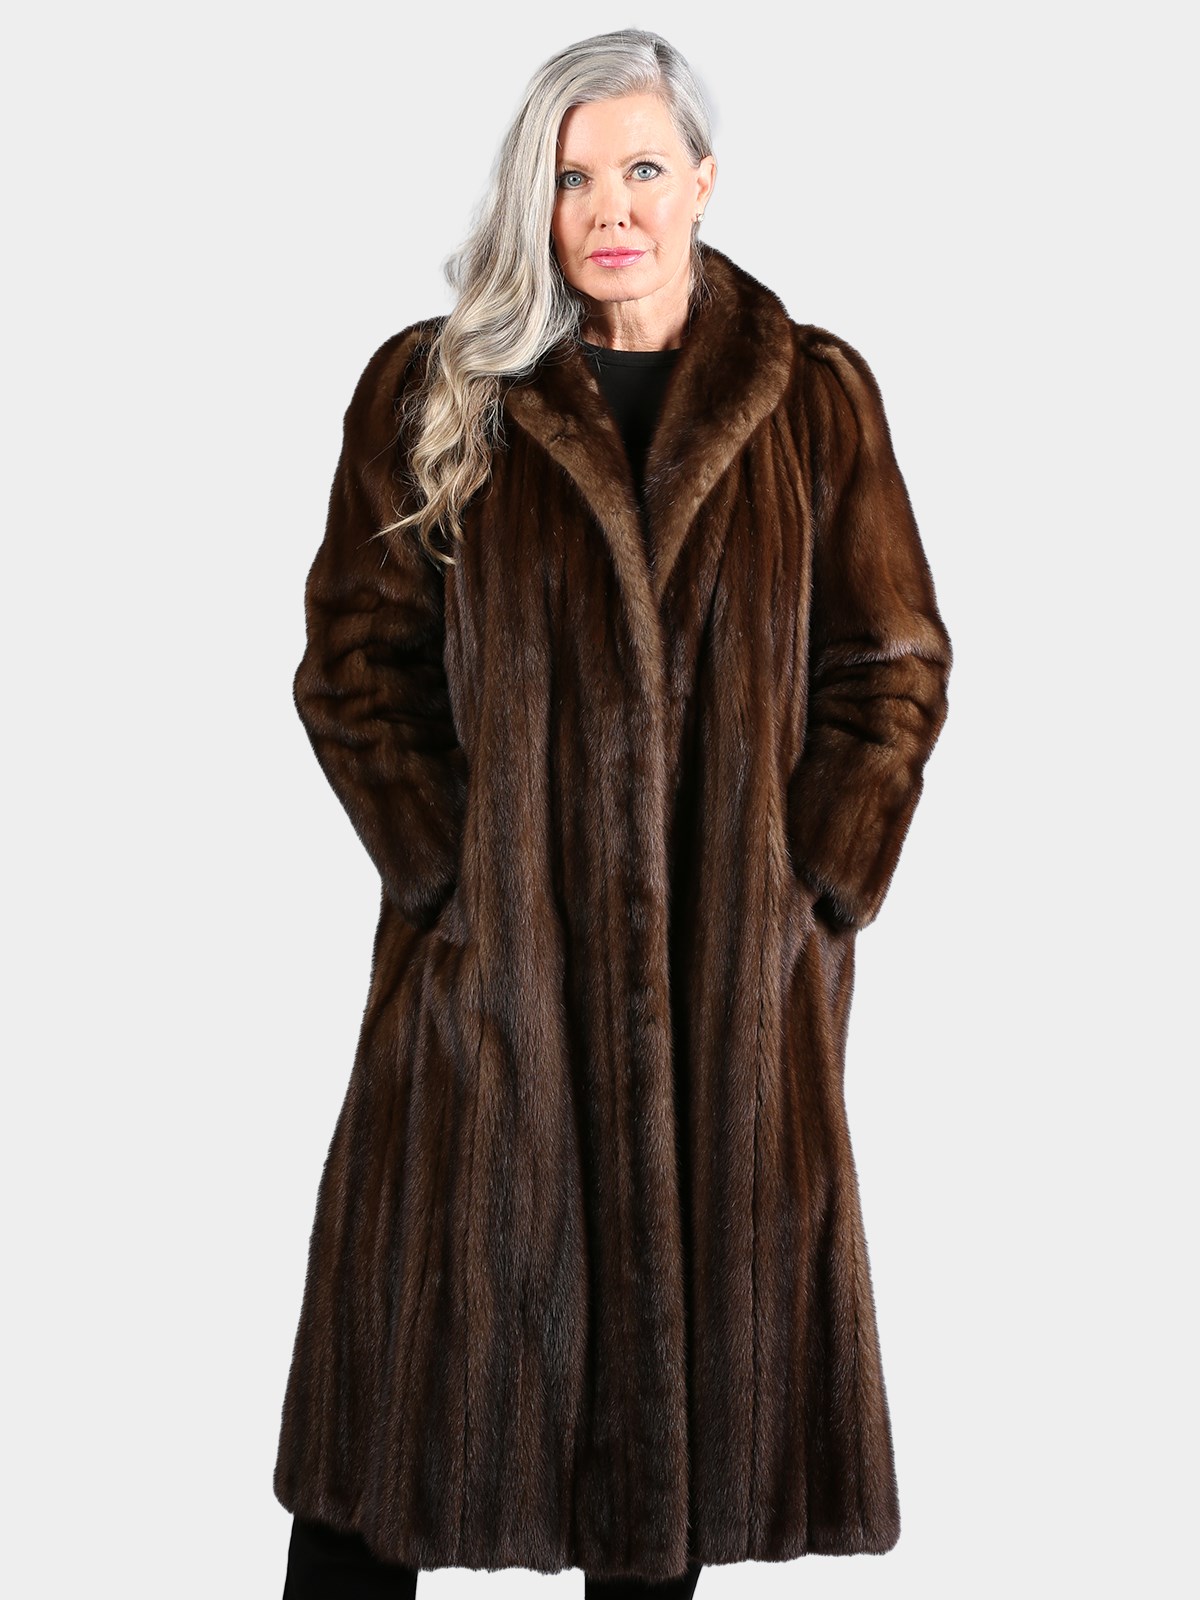 Woman's Mahogany Female Mink Fur Coat by Neiman Marcus